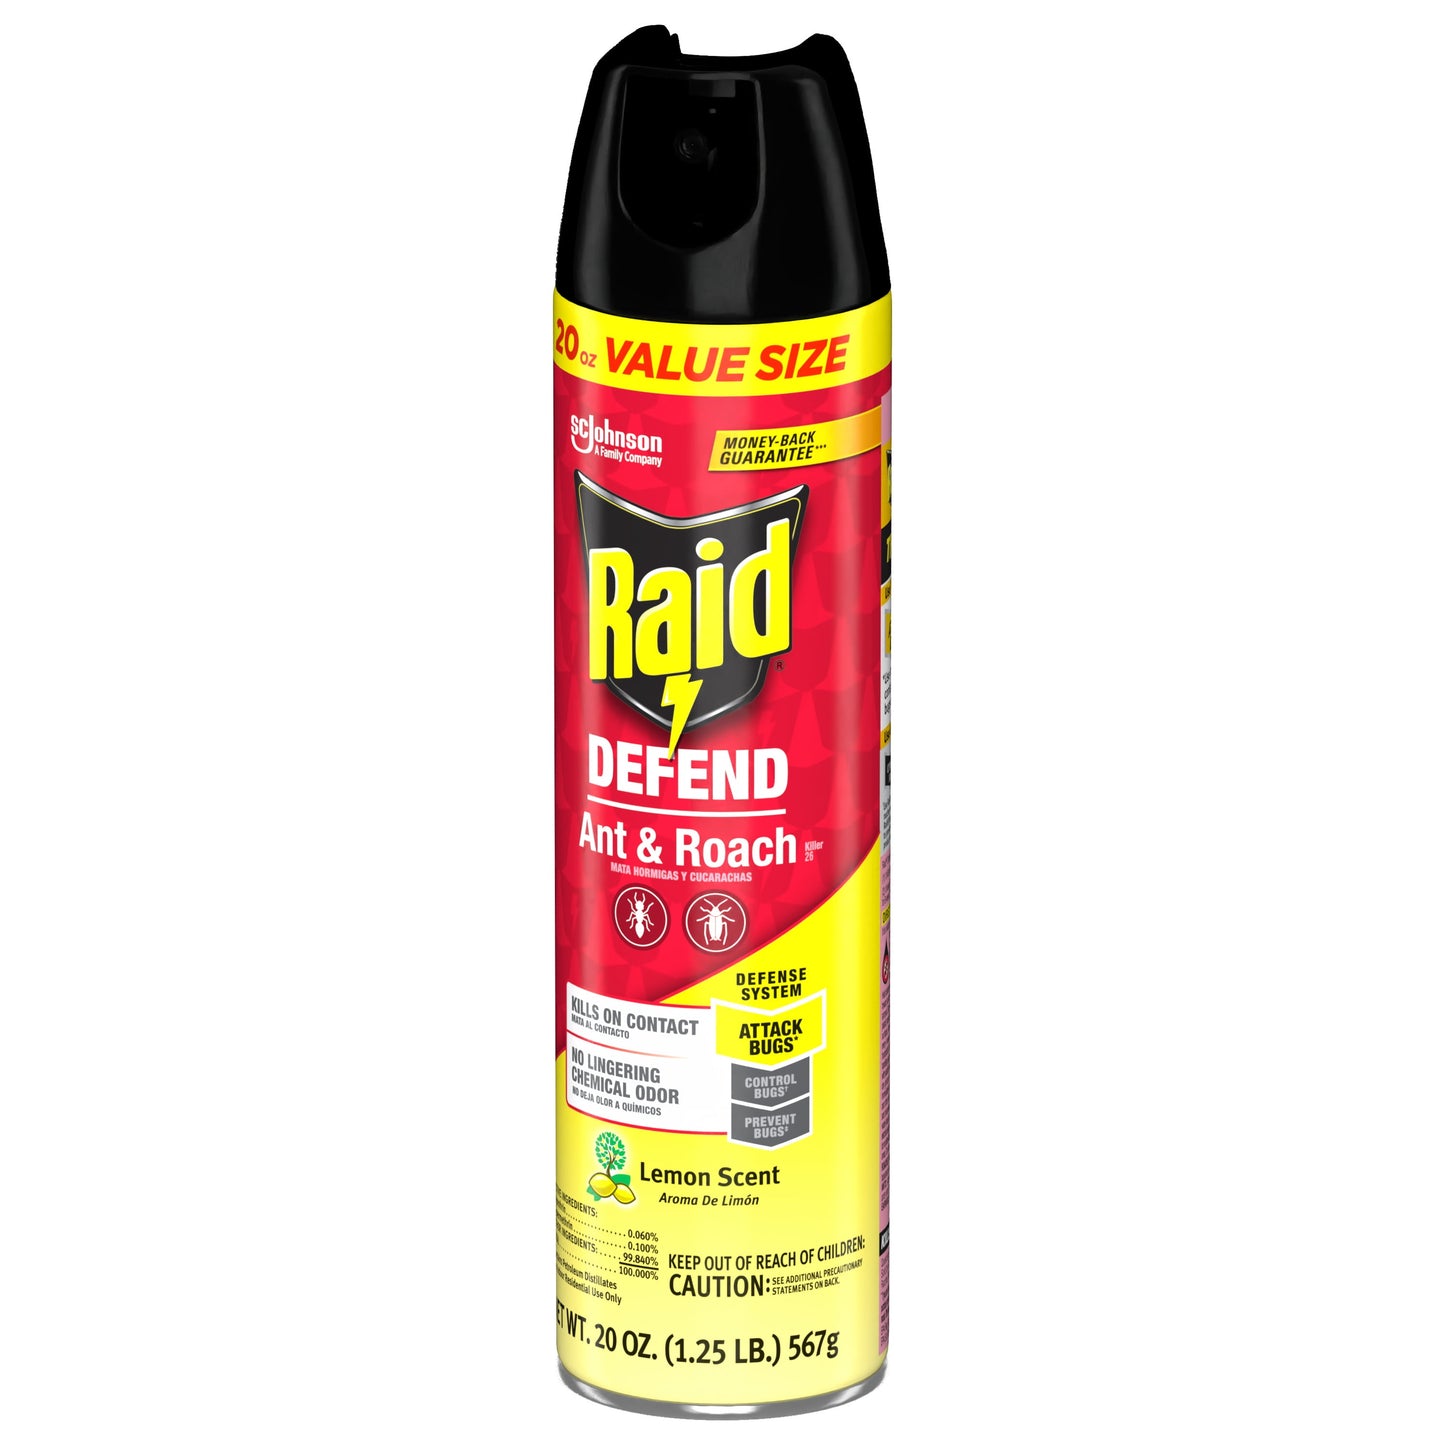 Raid Defend Indoor Defense System Roach and Ant Killer Spray Value Size, 20 oz